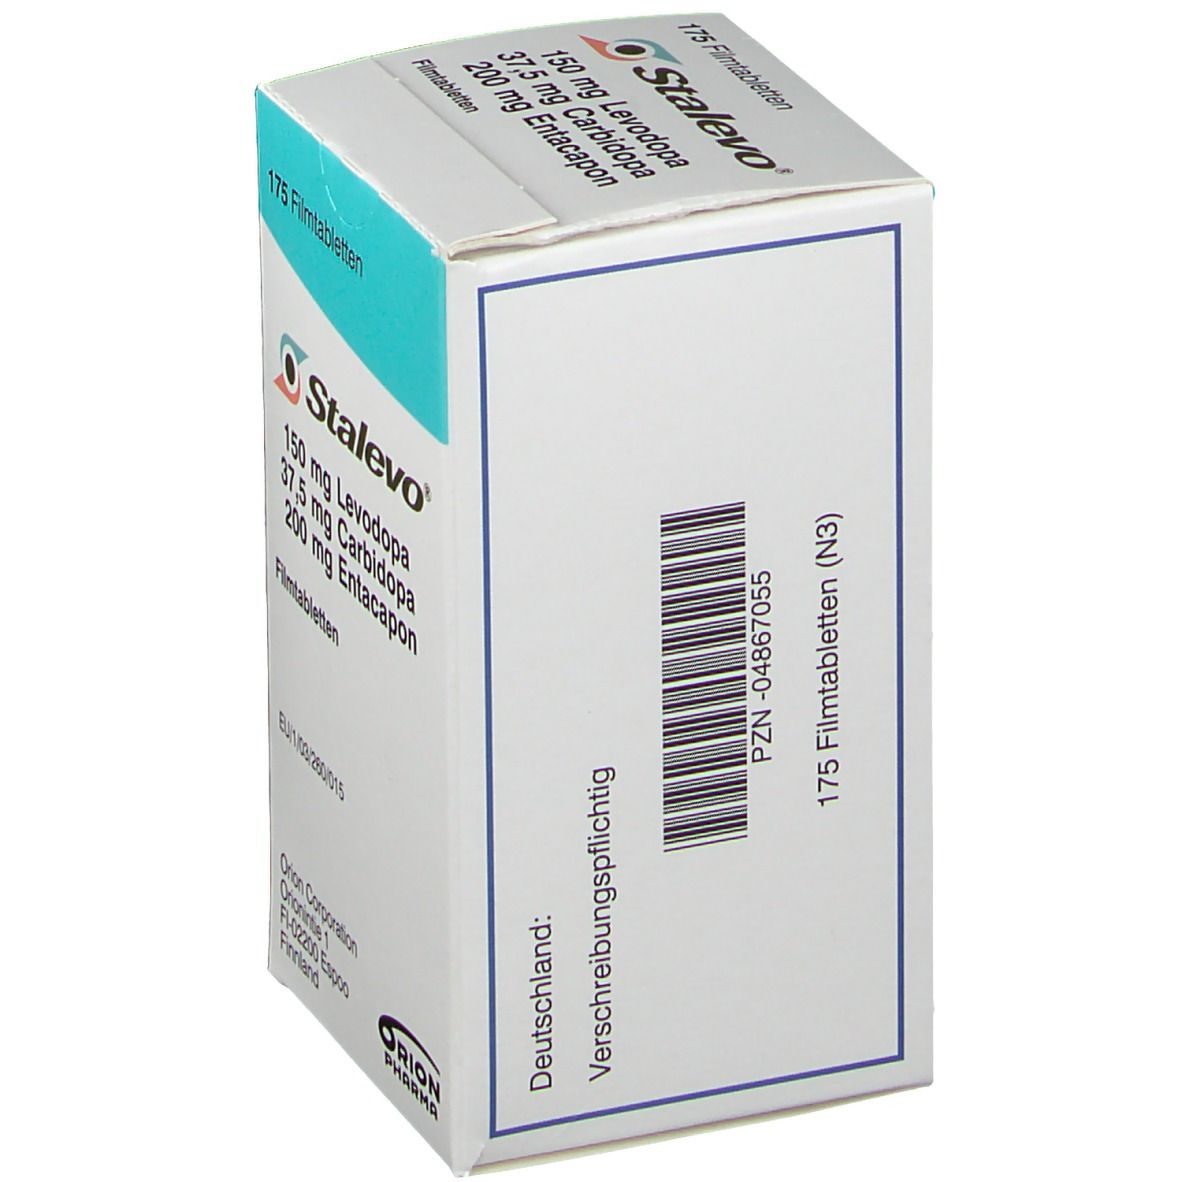 Stalevo® 150 mg/37,5 mg/200 mg